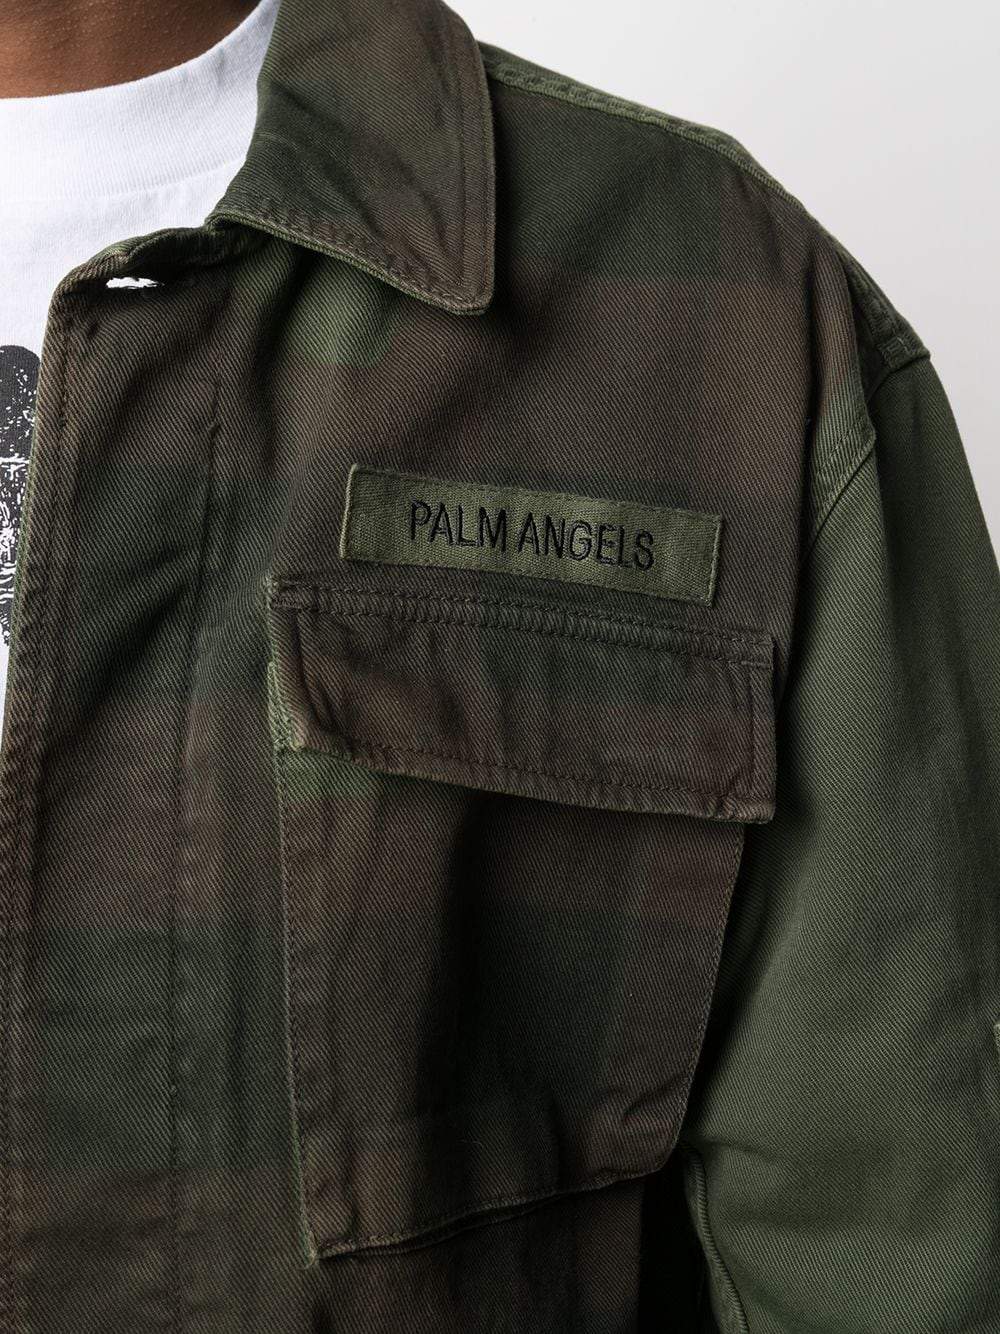 PALM ANGELS Military Buffalo Track Jacket - MAISONDEFASHION.COM